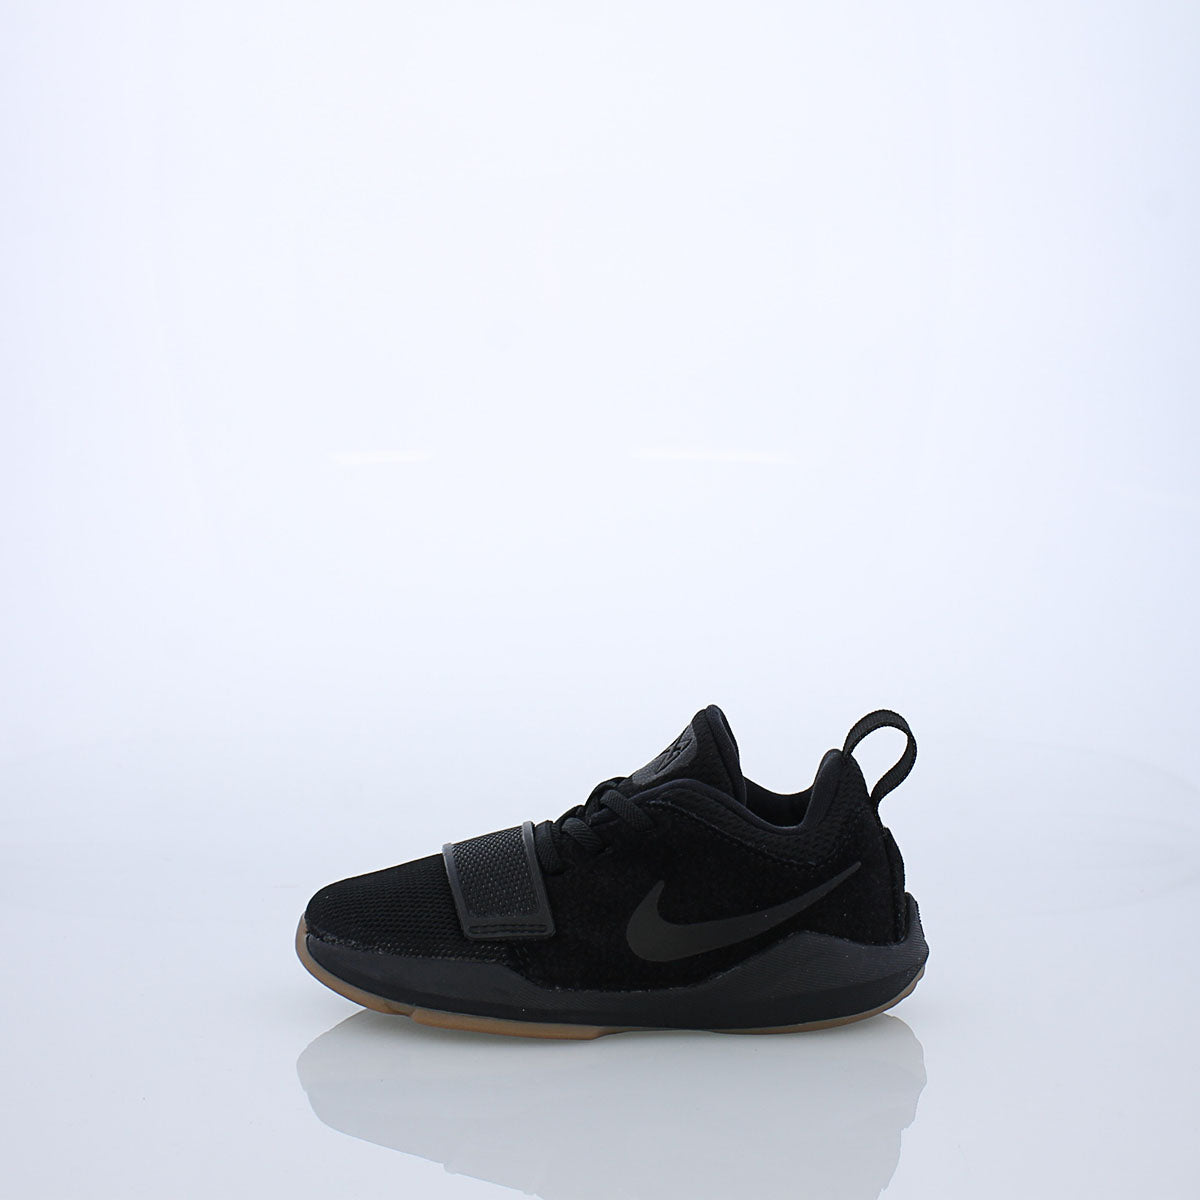 Nike PG1 (Infant/Toddler) – 881937-004 